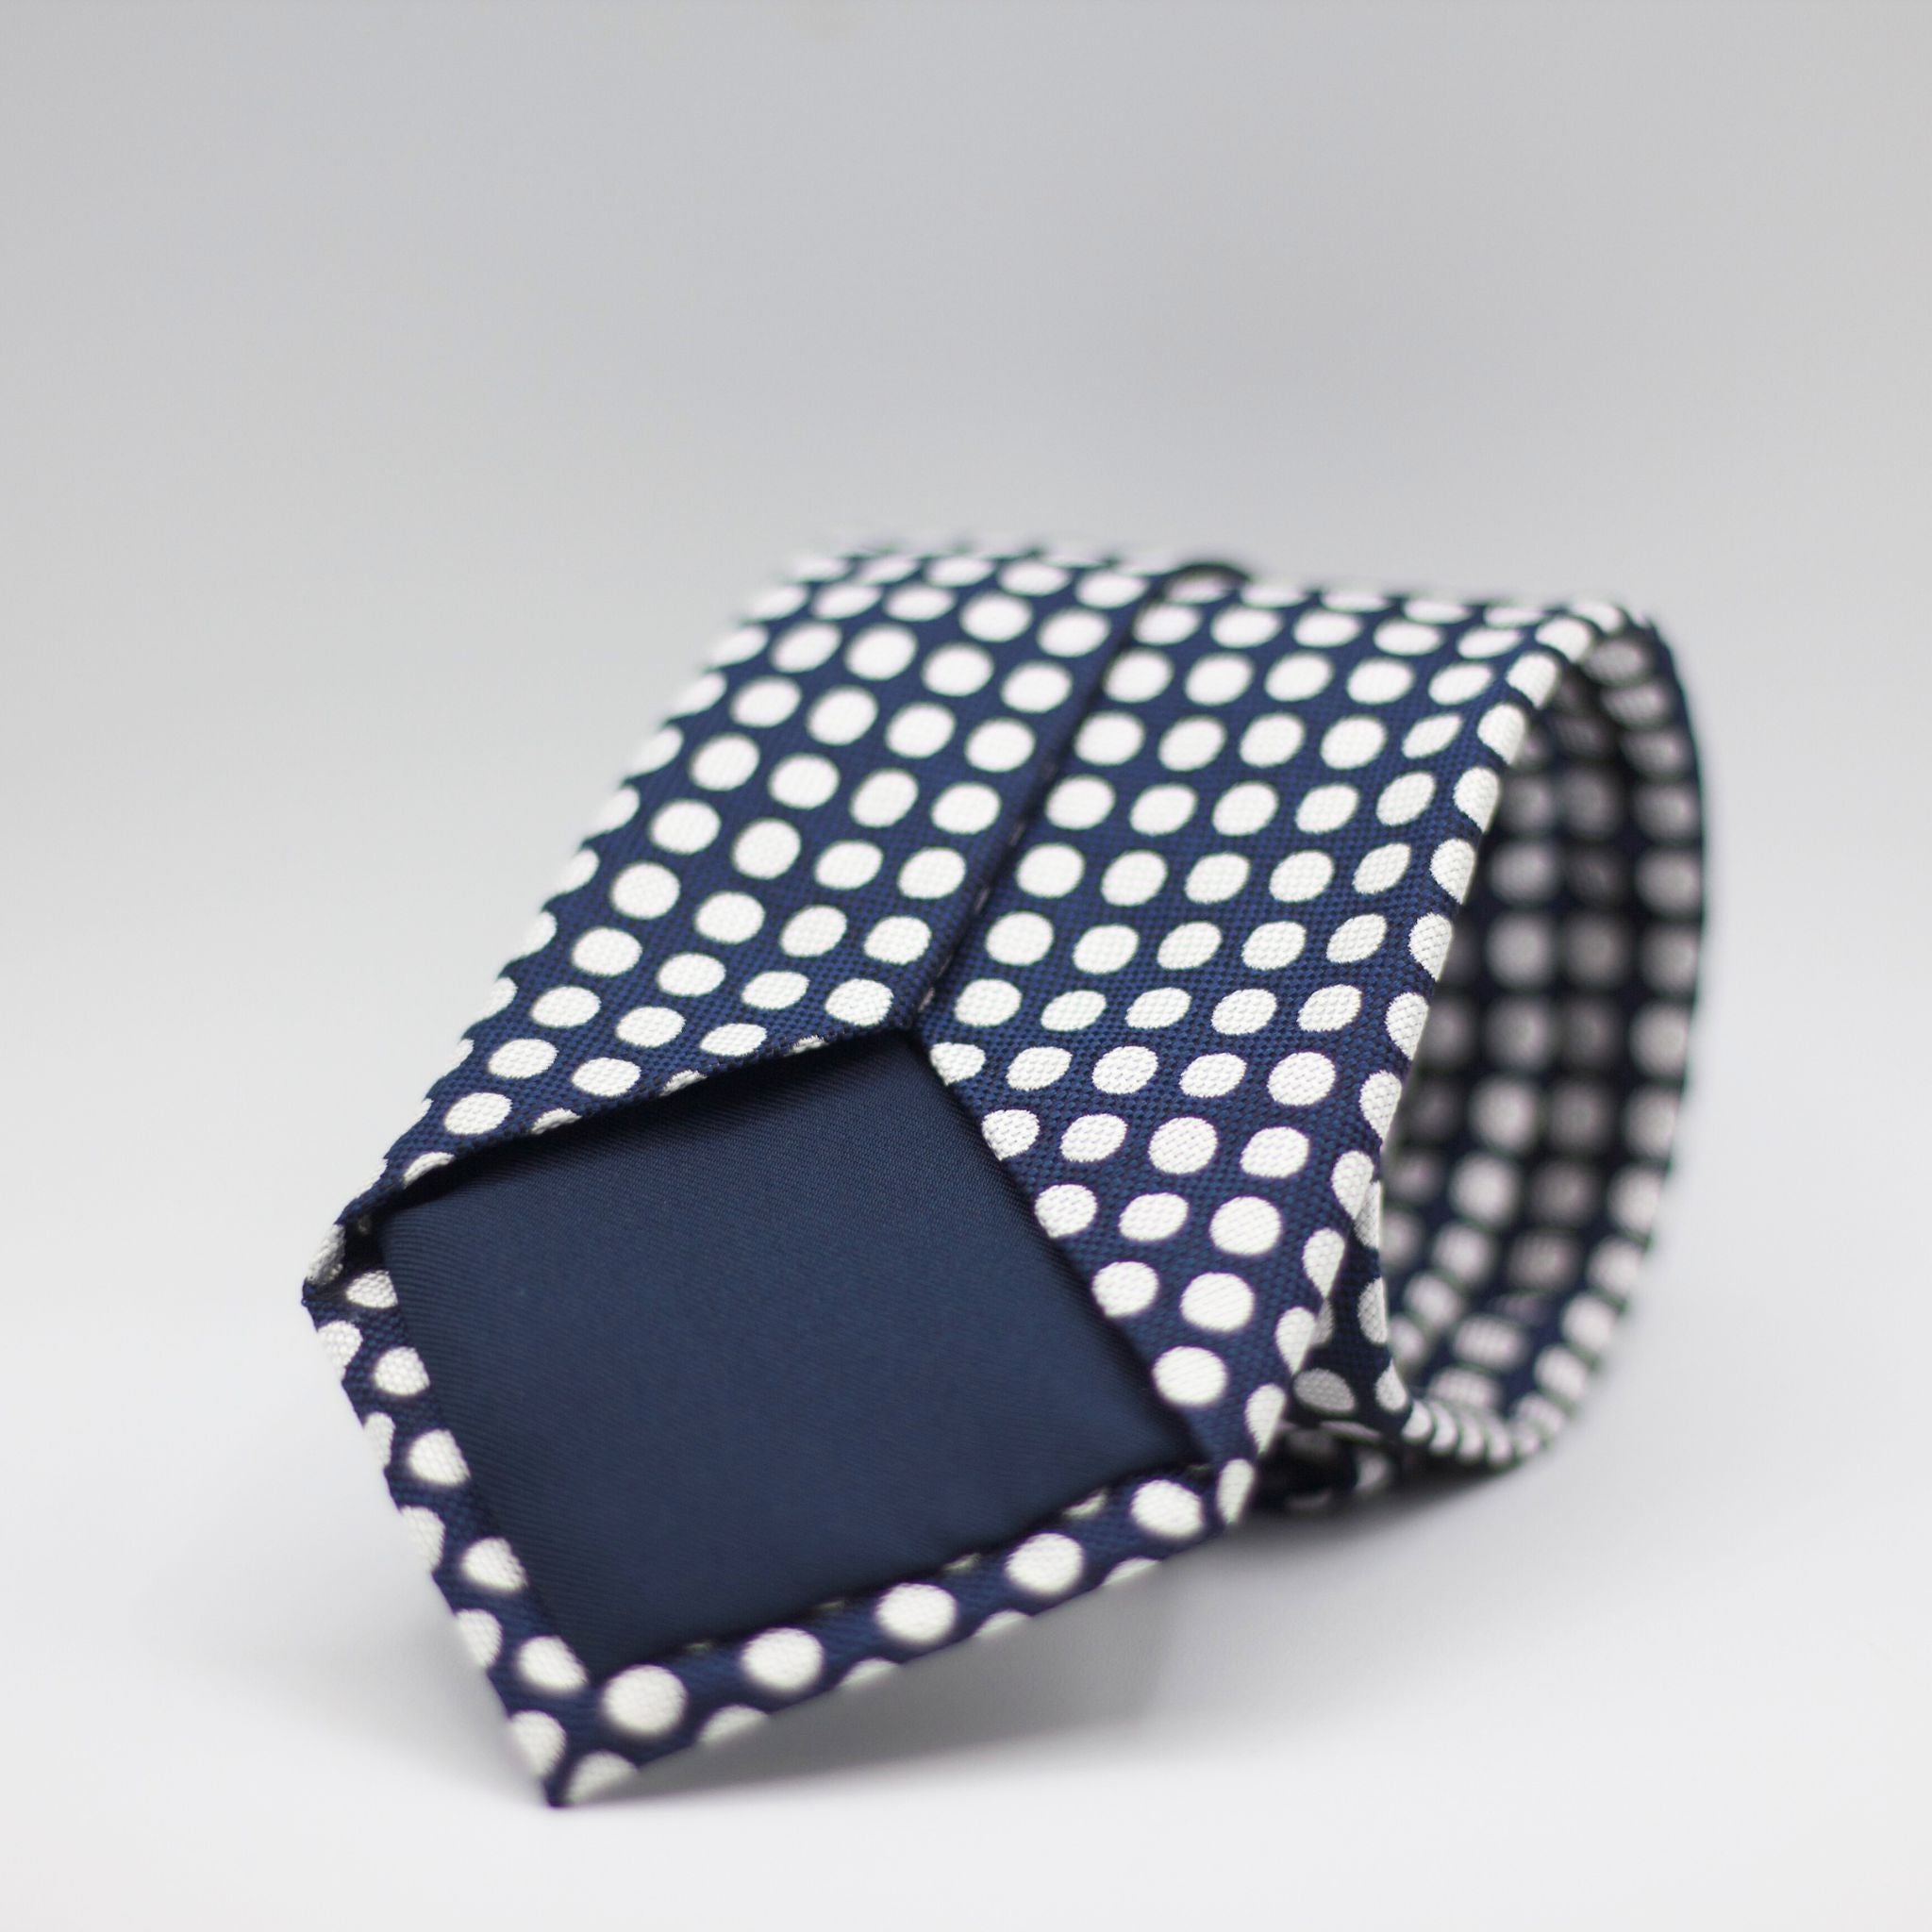 Cruciani & Bella - 3-Folds High - 100% Silk - Blue Navy  "Winston's Spot" Tie #7719